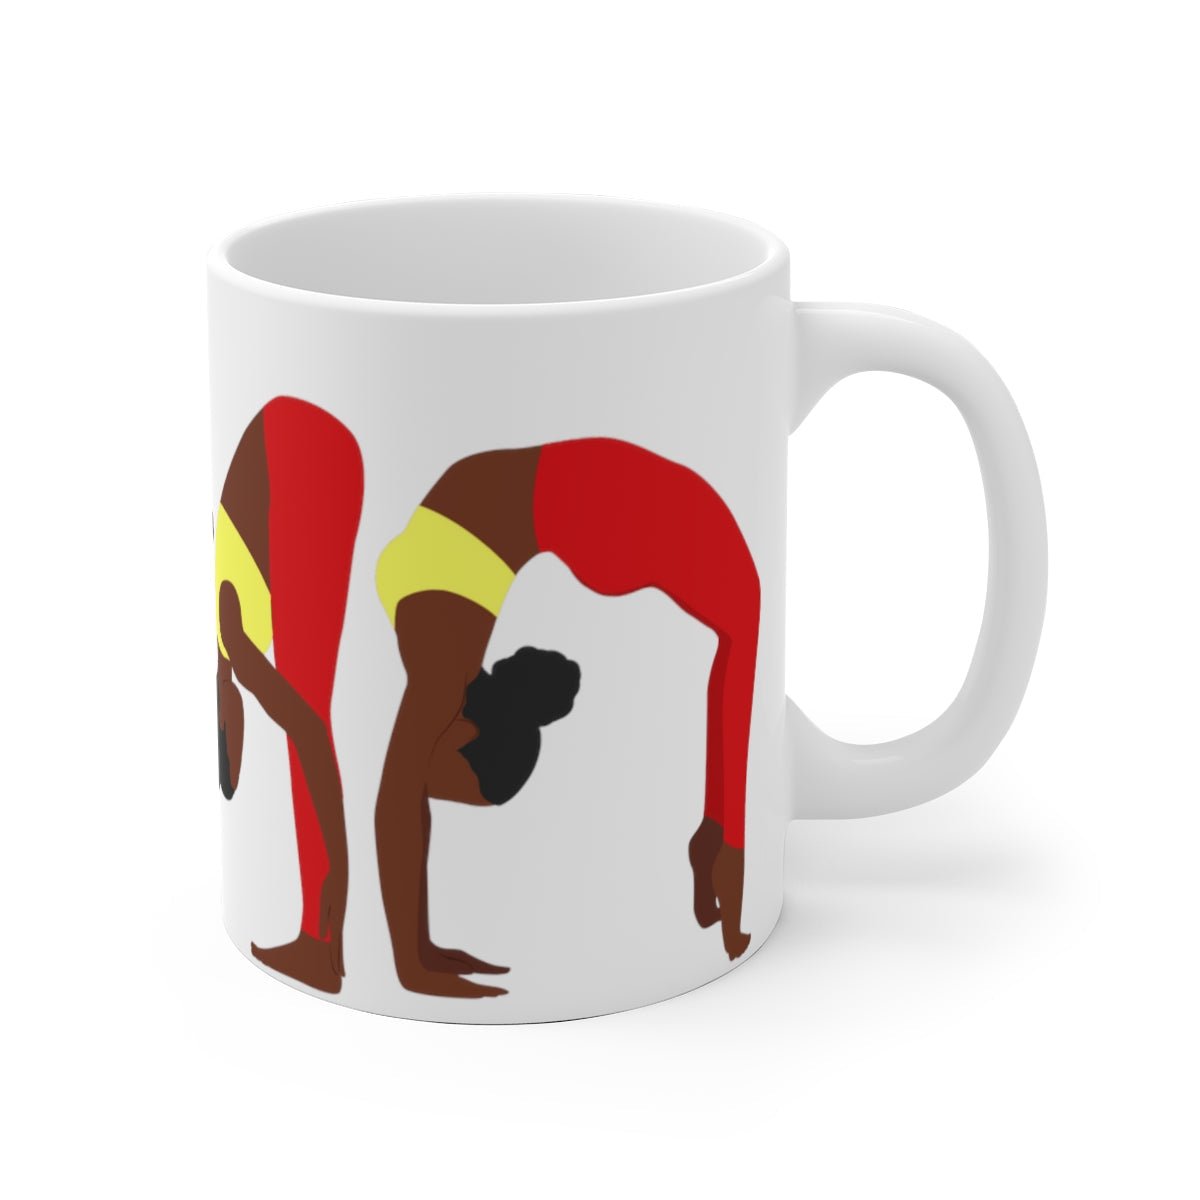 Yoga Poses Mug - The Trini Gee